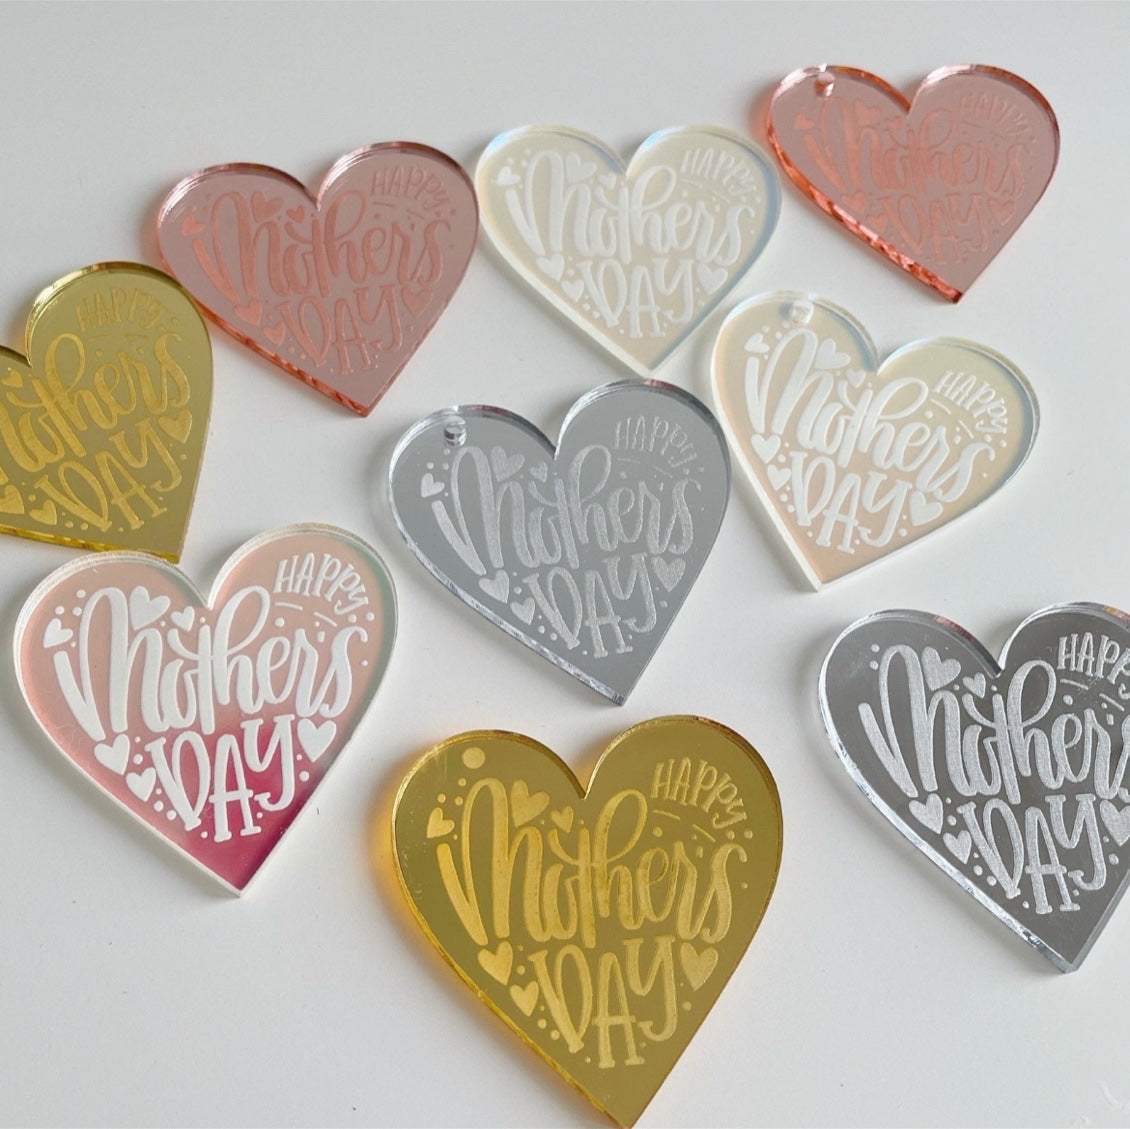 Heart Shaped Happy Mother's Day Acrylic Cake Box Tags.